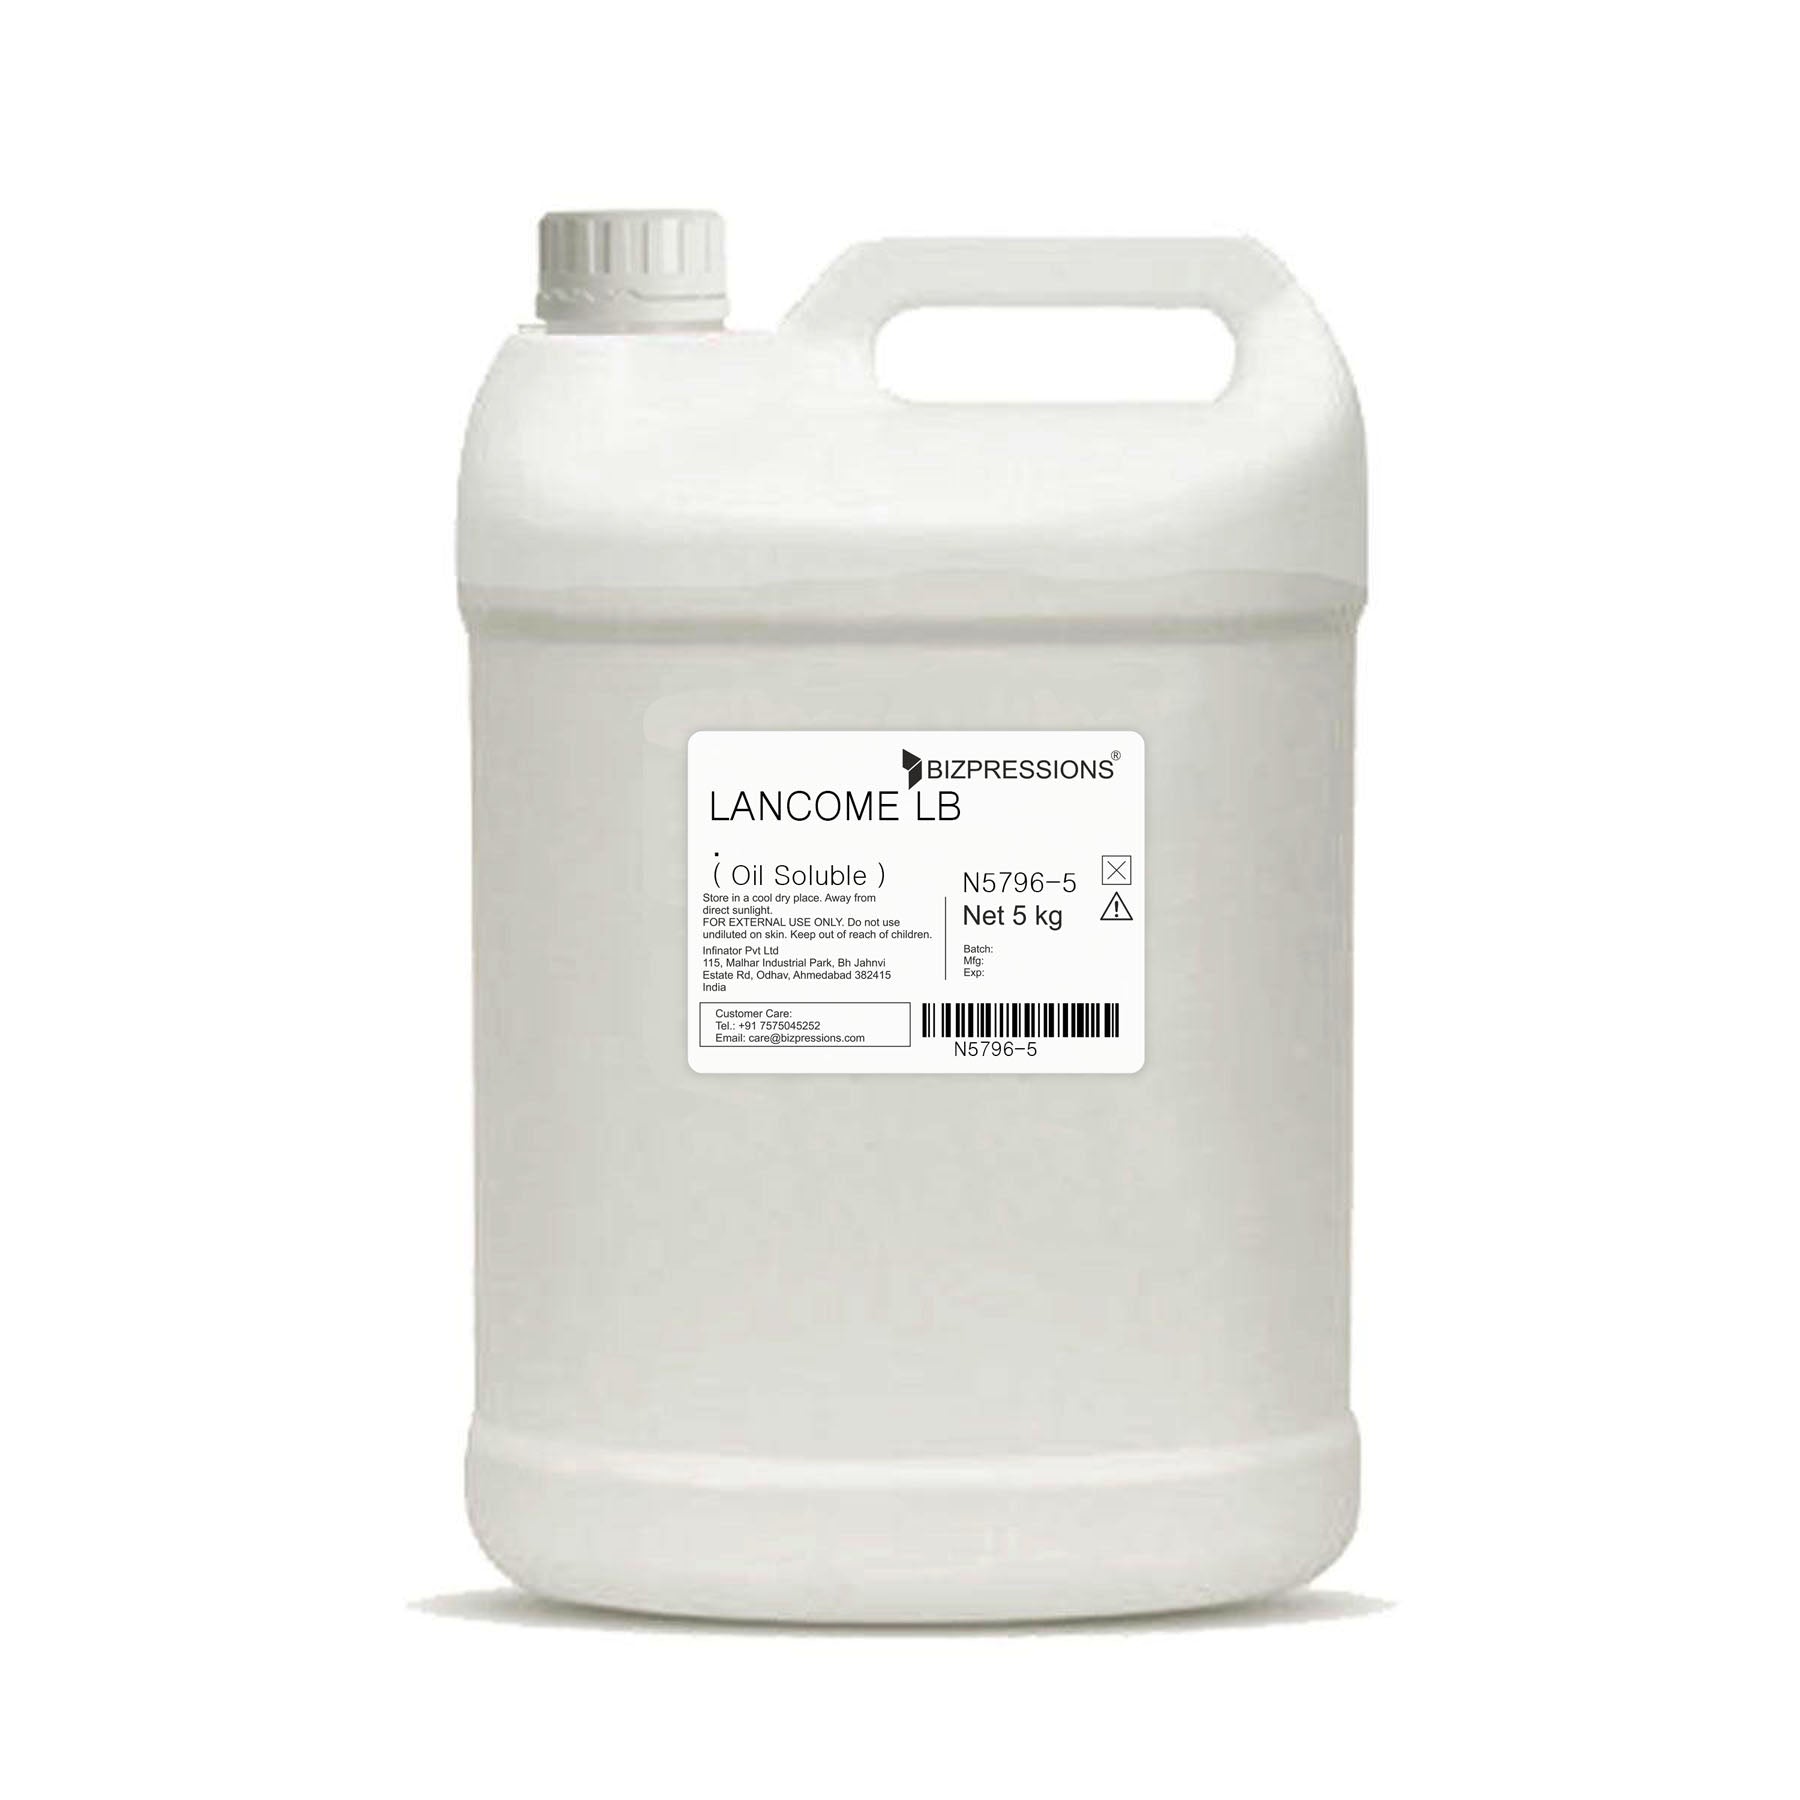 LANCOME LB - Fragrance ( Oil Soluble ) - 5 kg